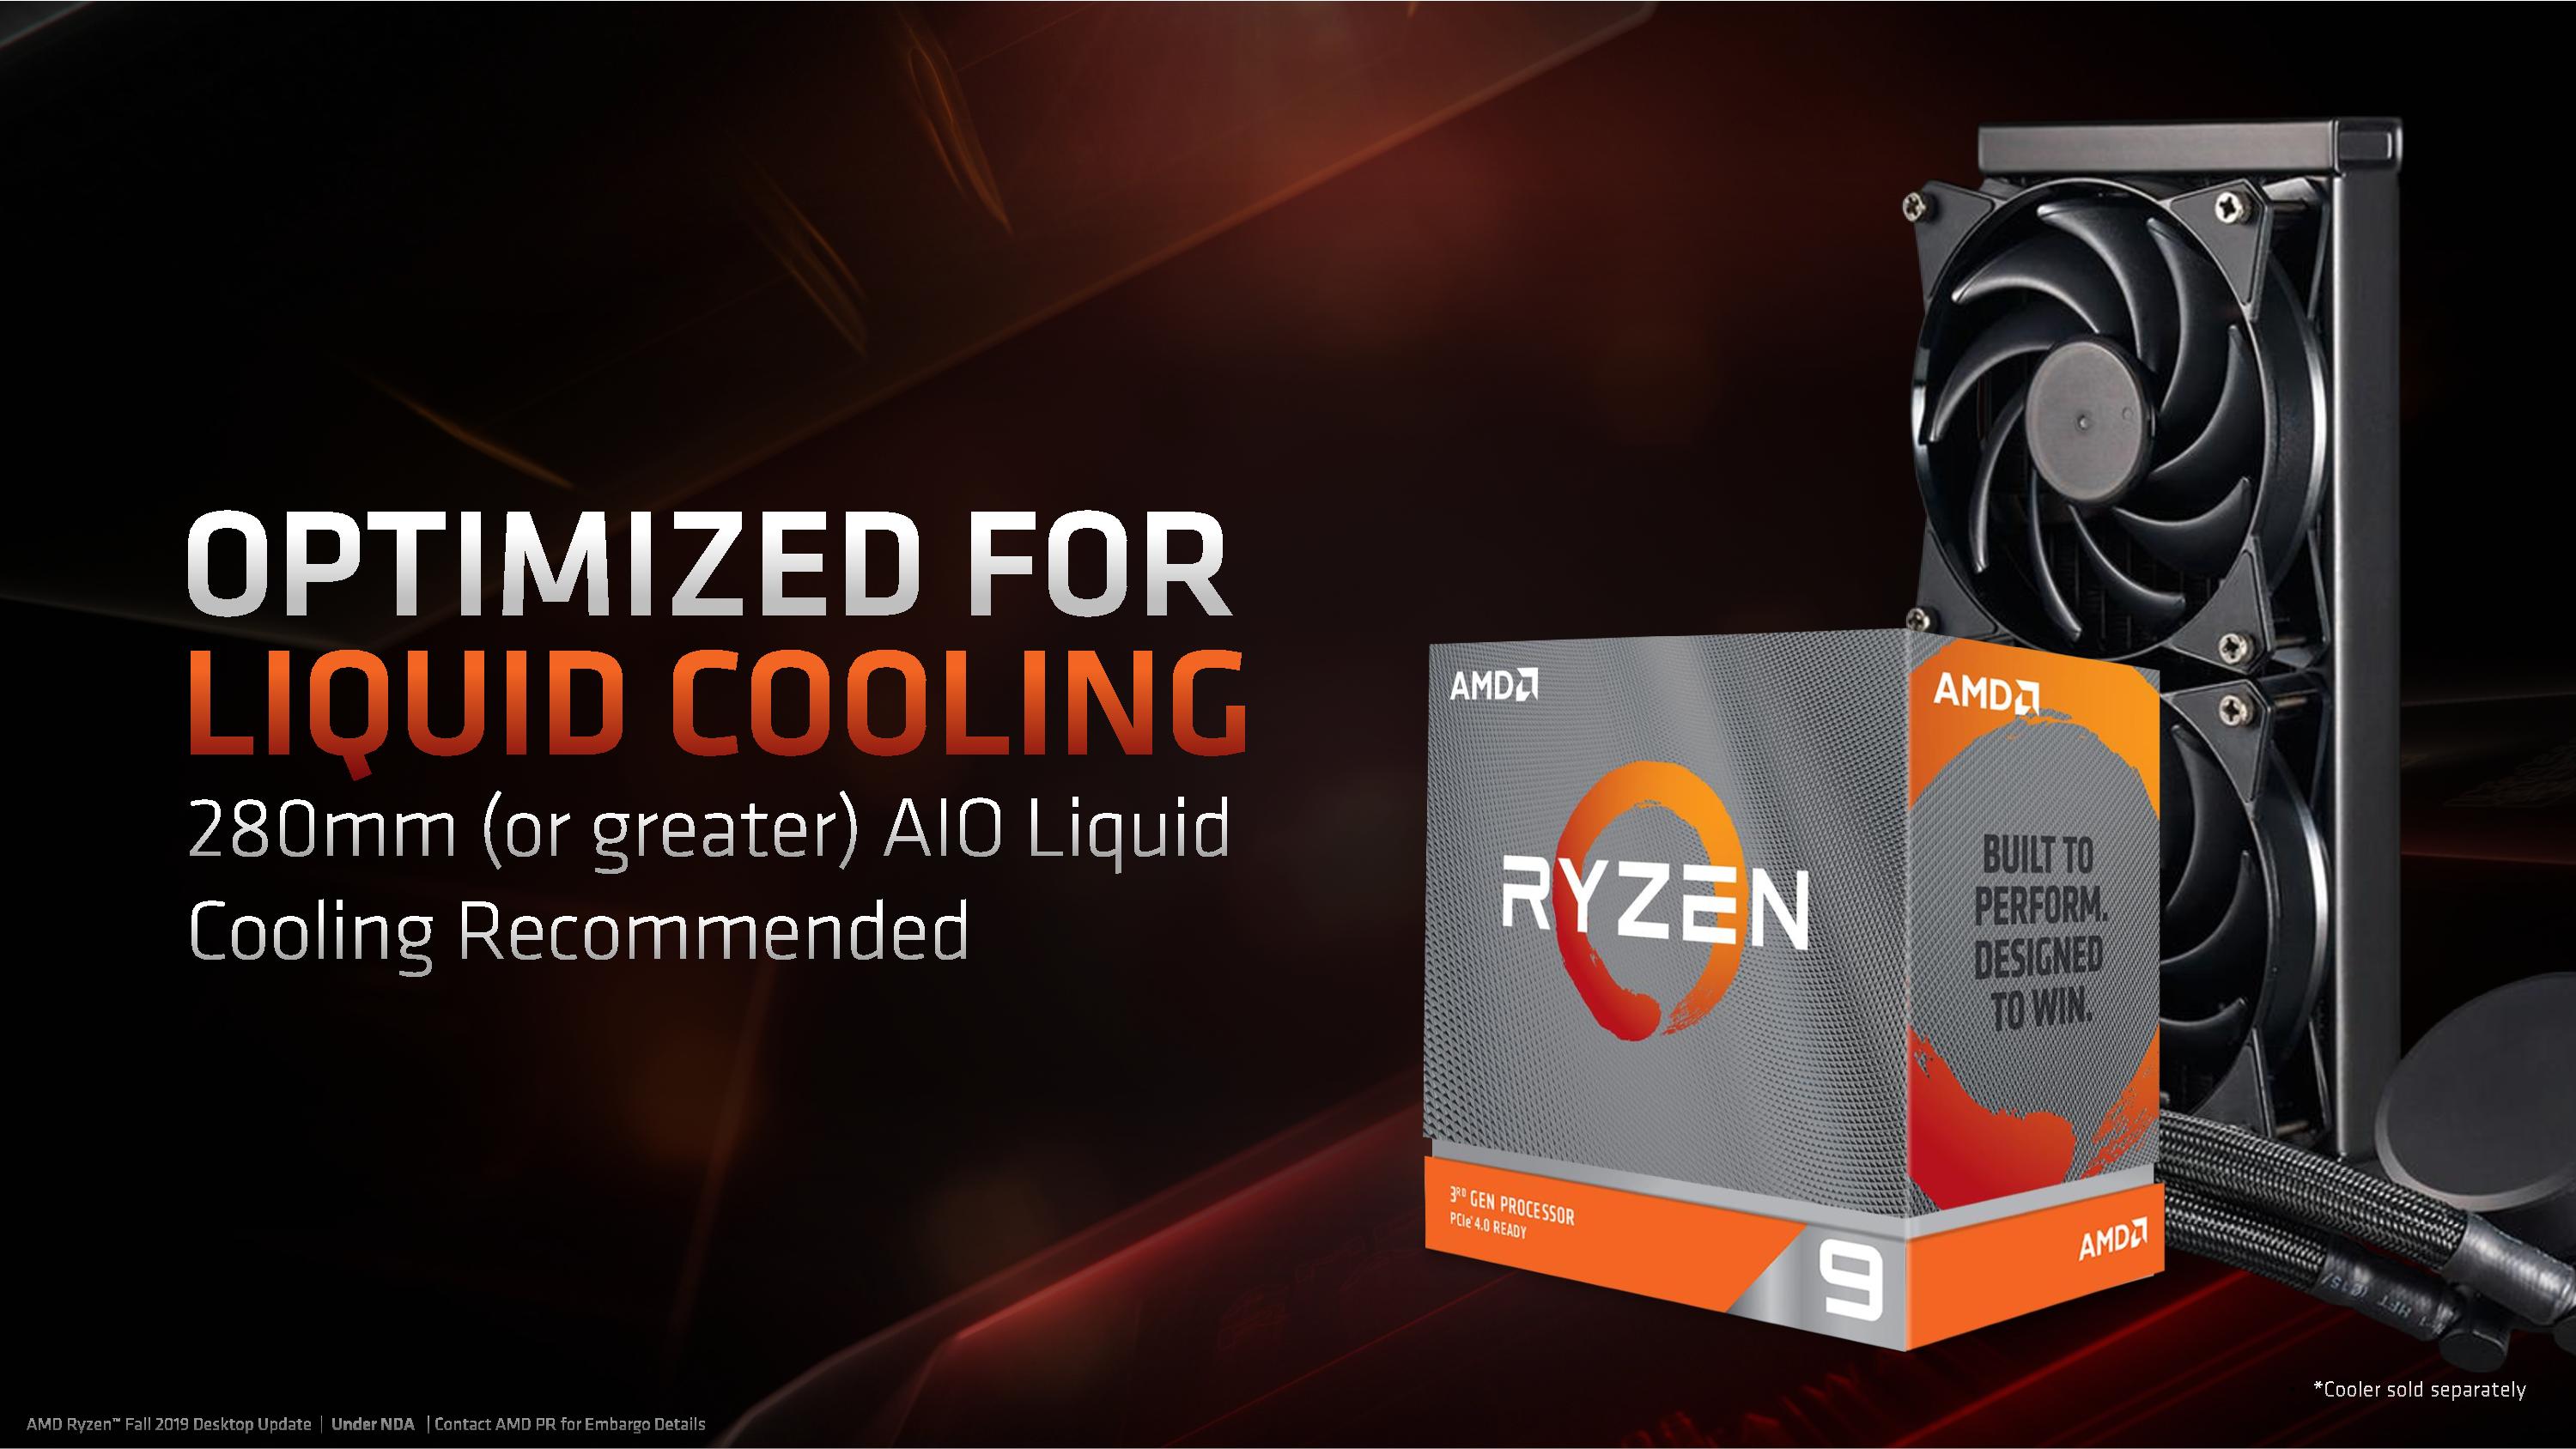 Ryzen 9 3950X: Retail on November 25th - AMD Q4: 16-core Ryzen 9 